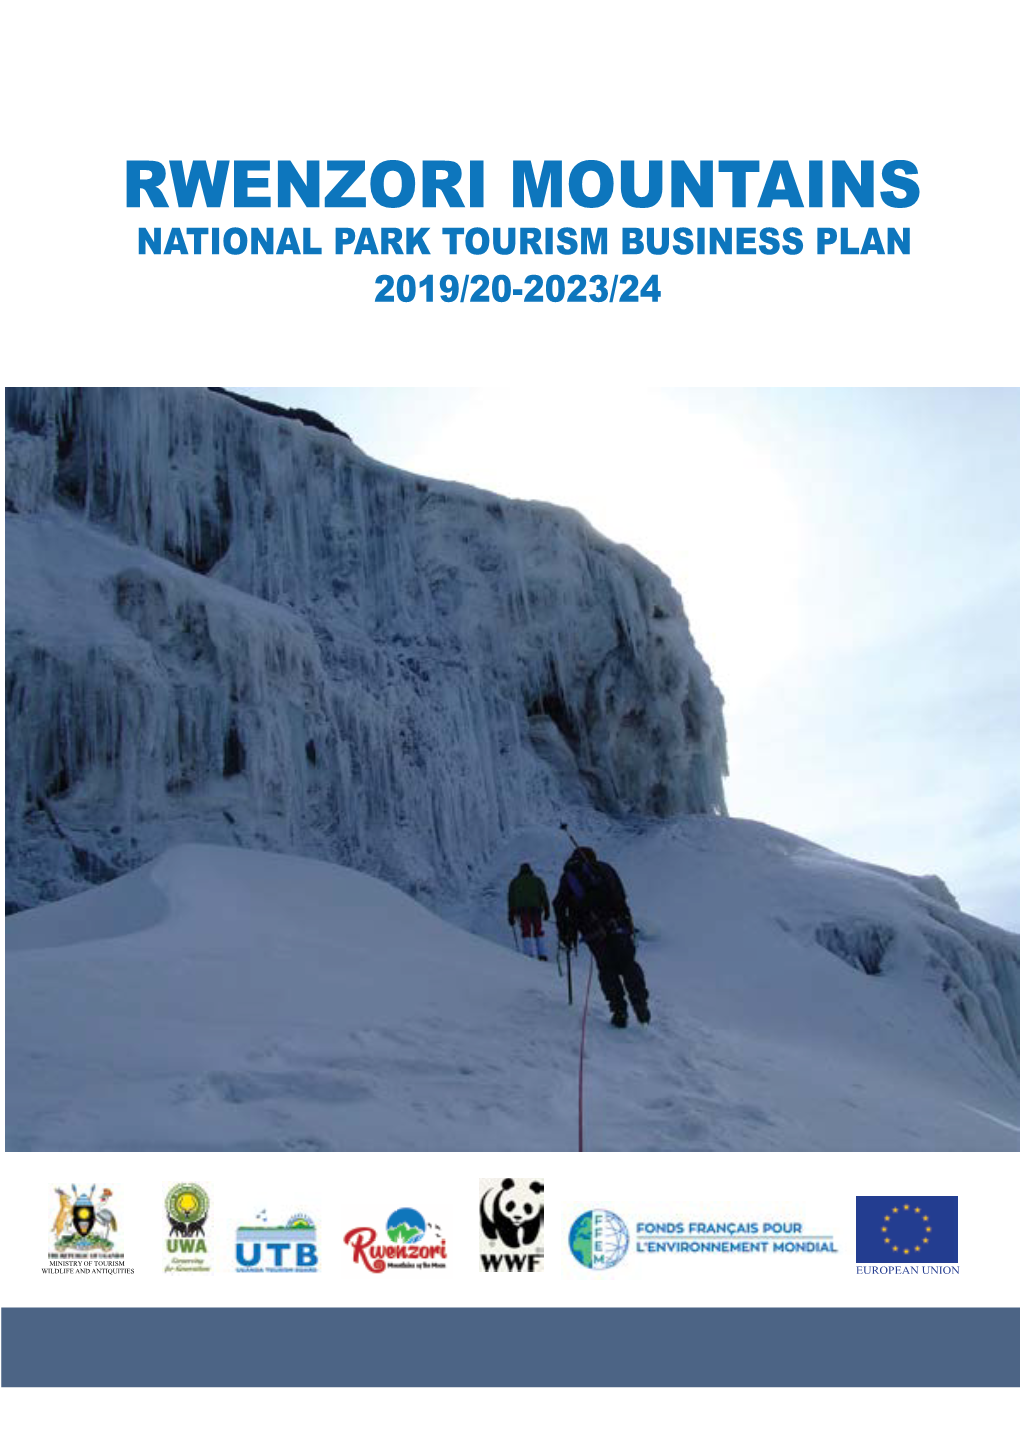 Rwenzori Mountains National Park Tourism Business Plan 2019/20-2023/24